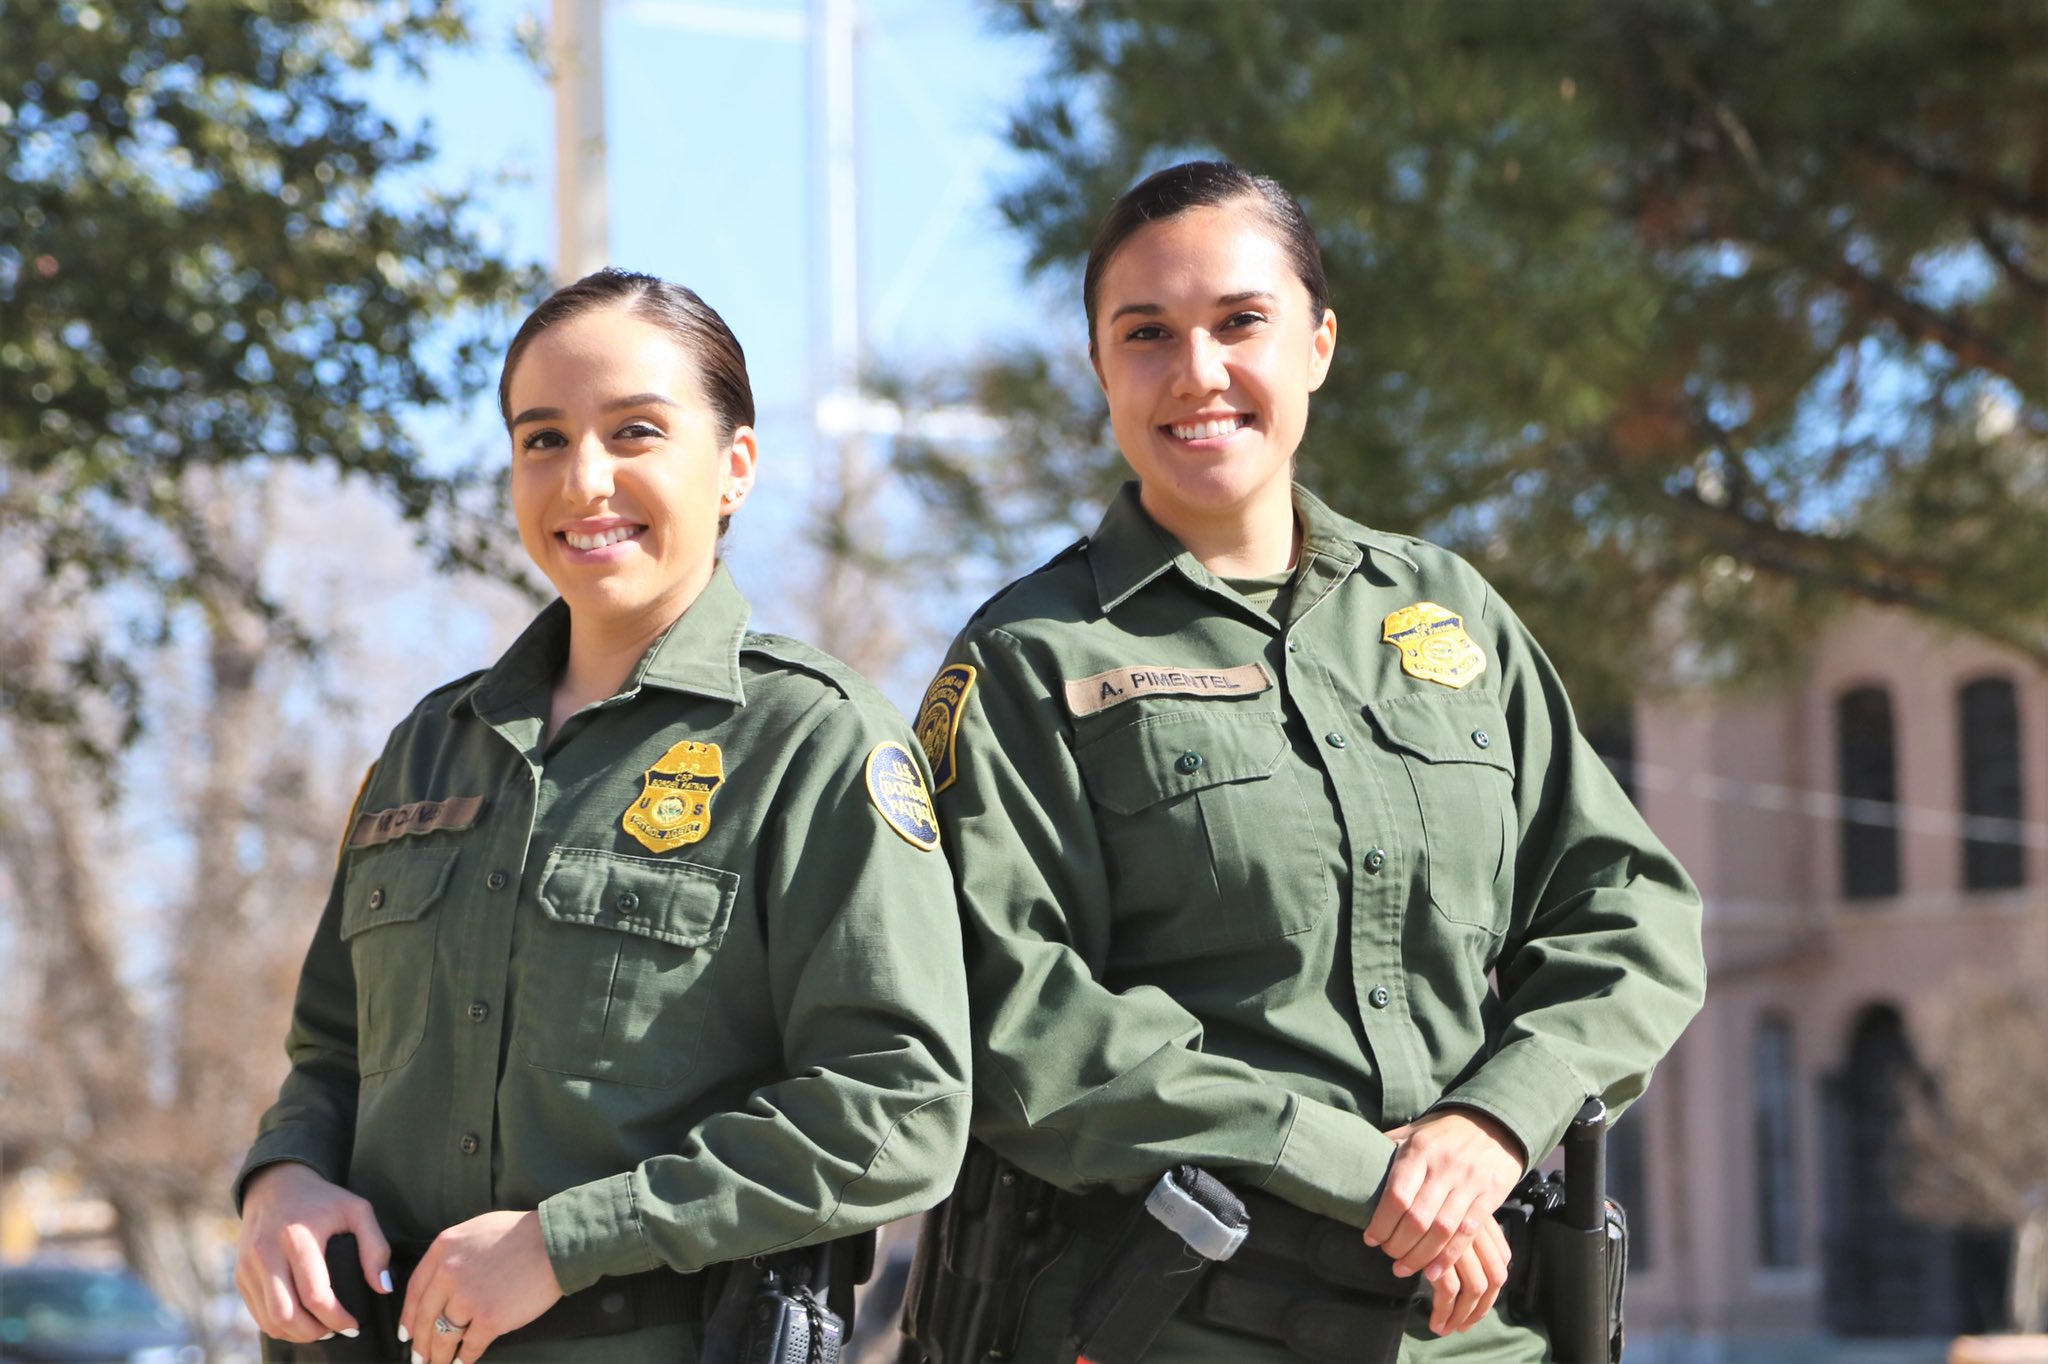 Customs and Border Patrol Agent Salutes